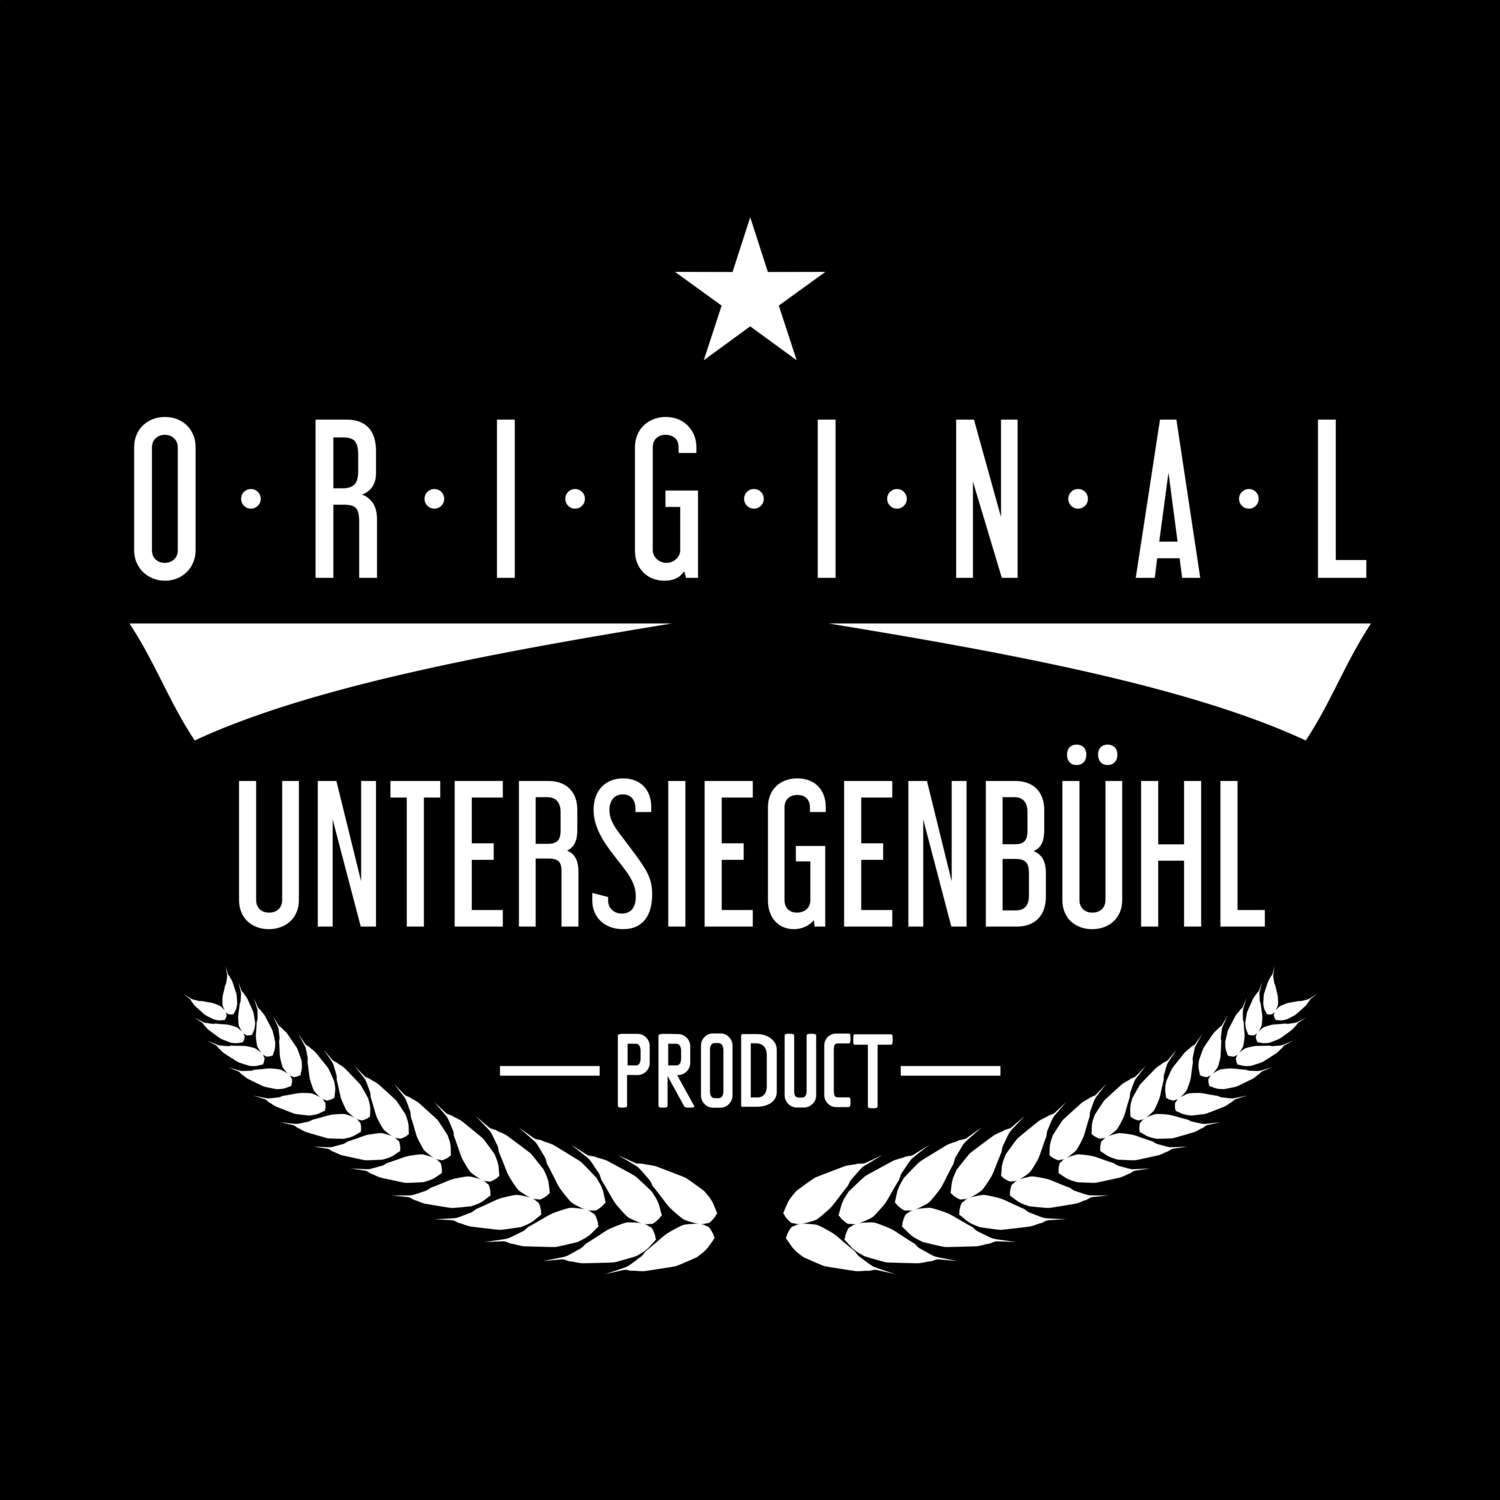 Untersiegenbühl T-Shirt »Original Product«